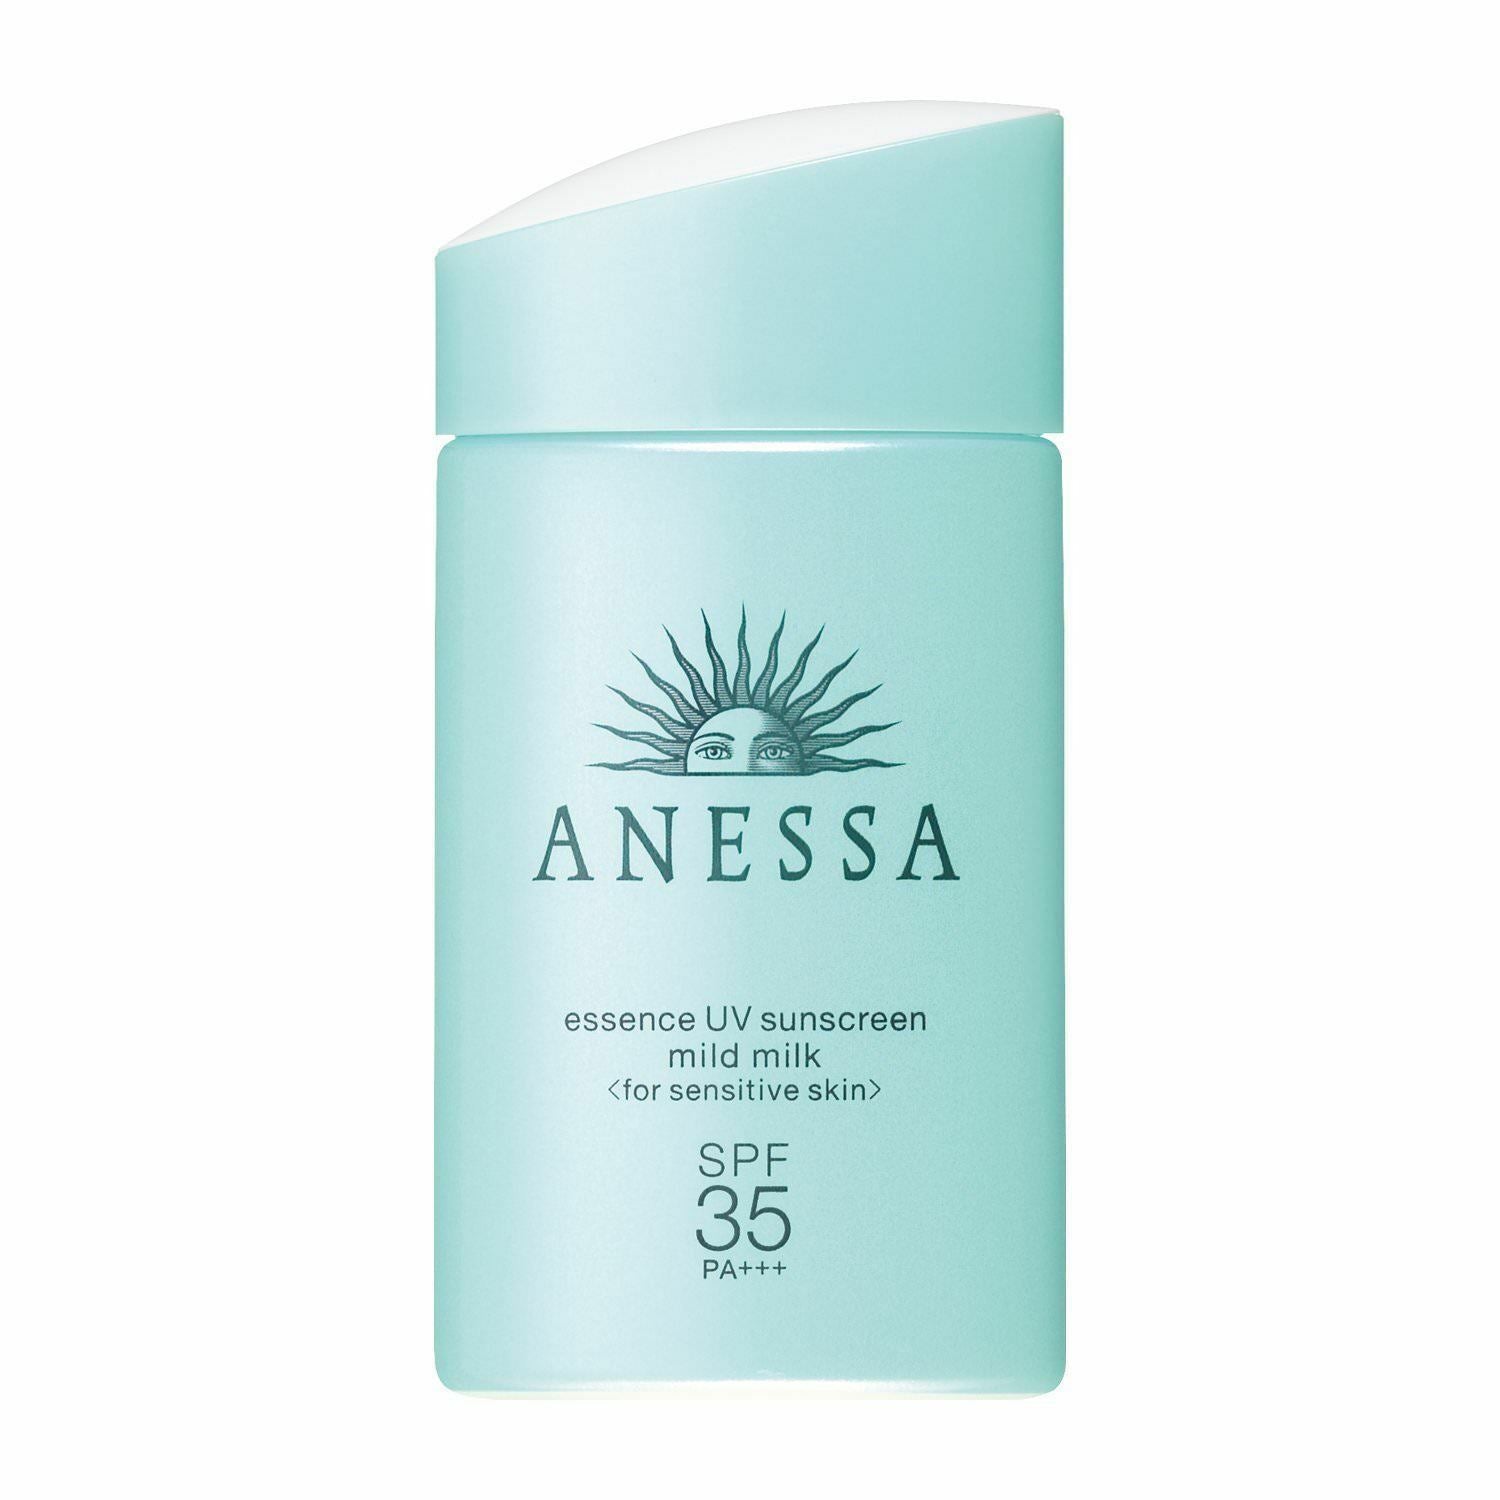 Anessa Essence UV Sunscreen Mild Milk For Sensitive Skin SPF 35 PA+++ Beauty Shiseido   